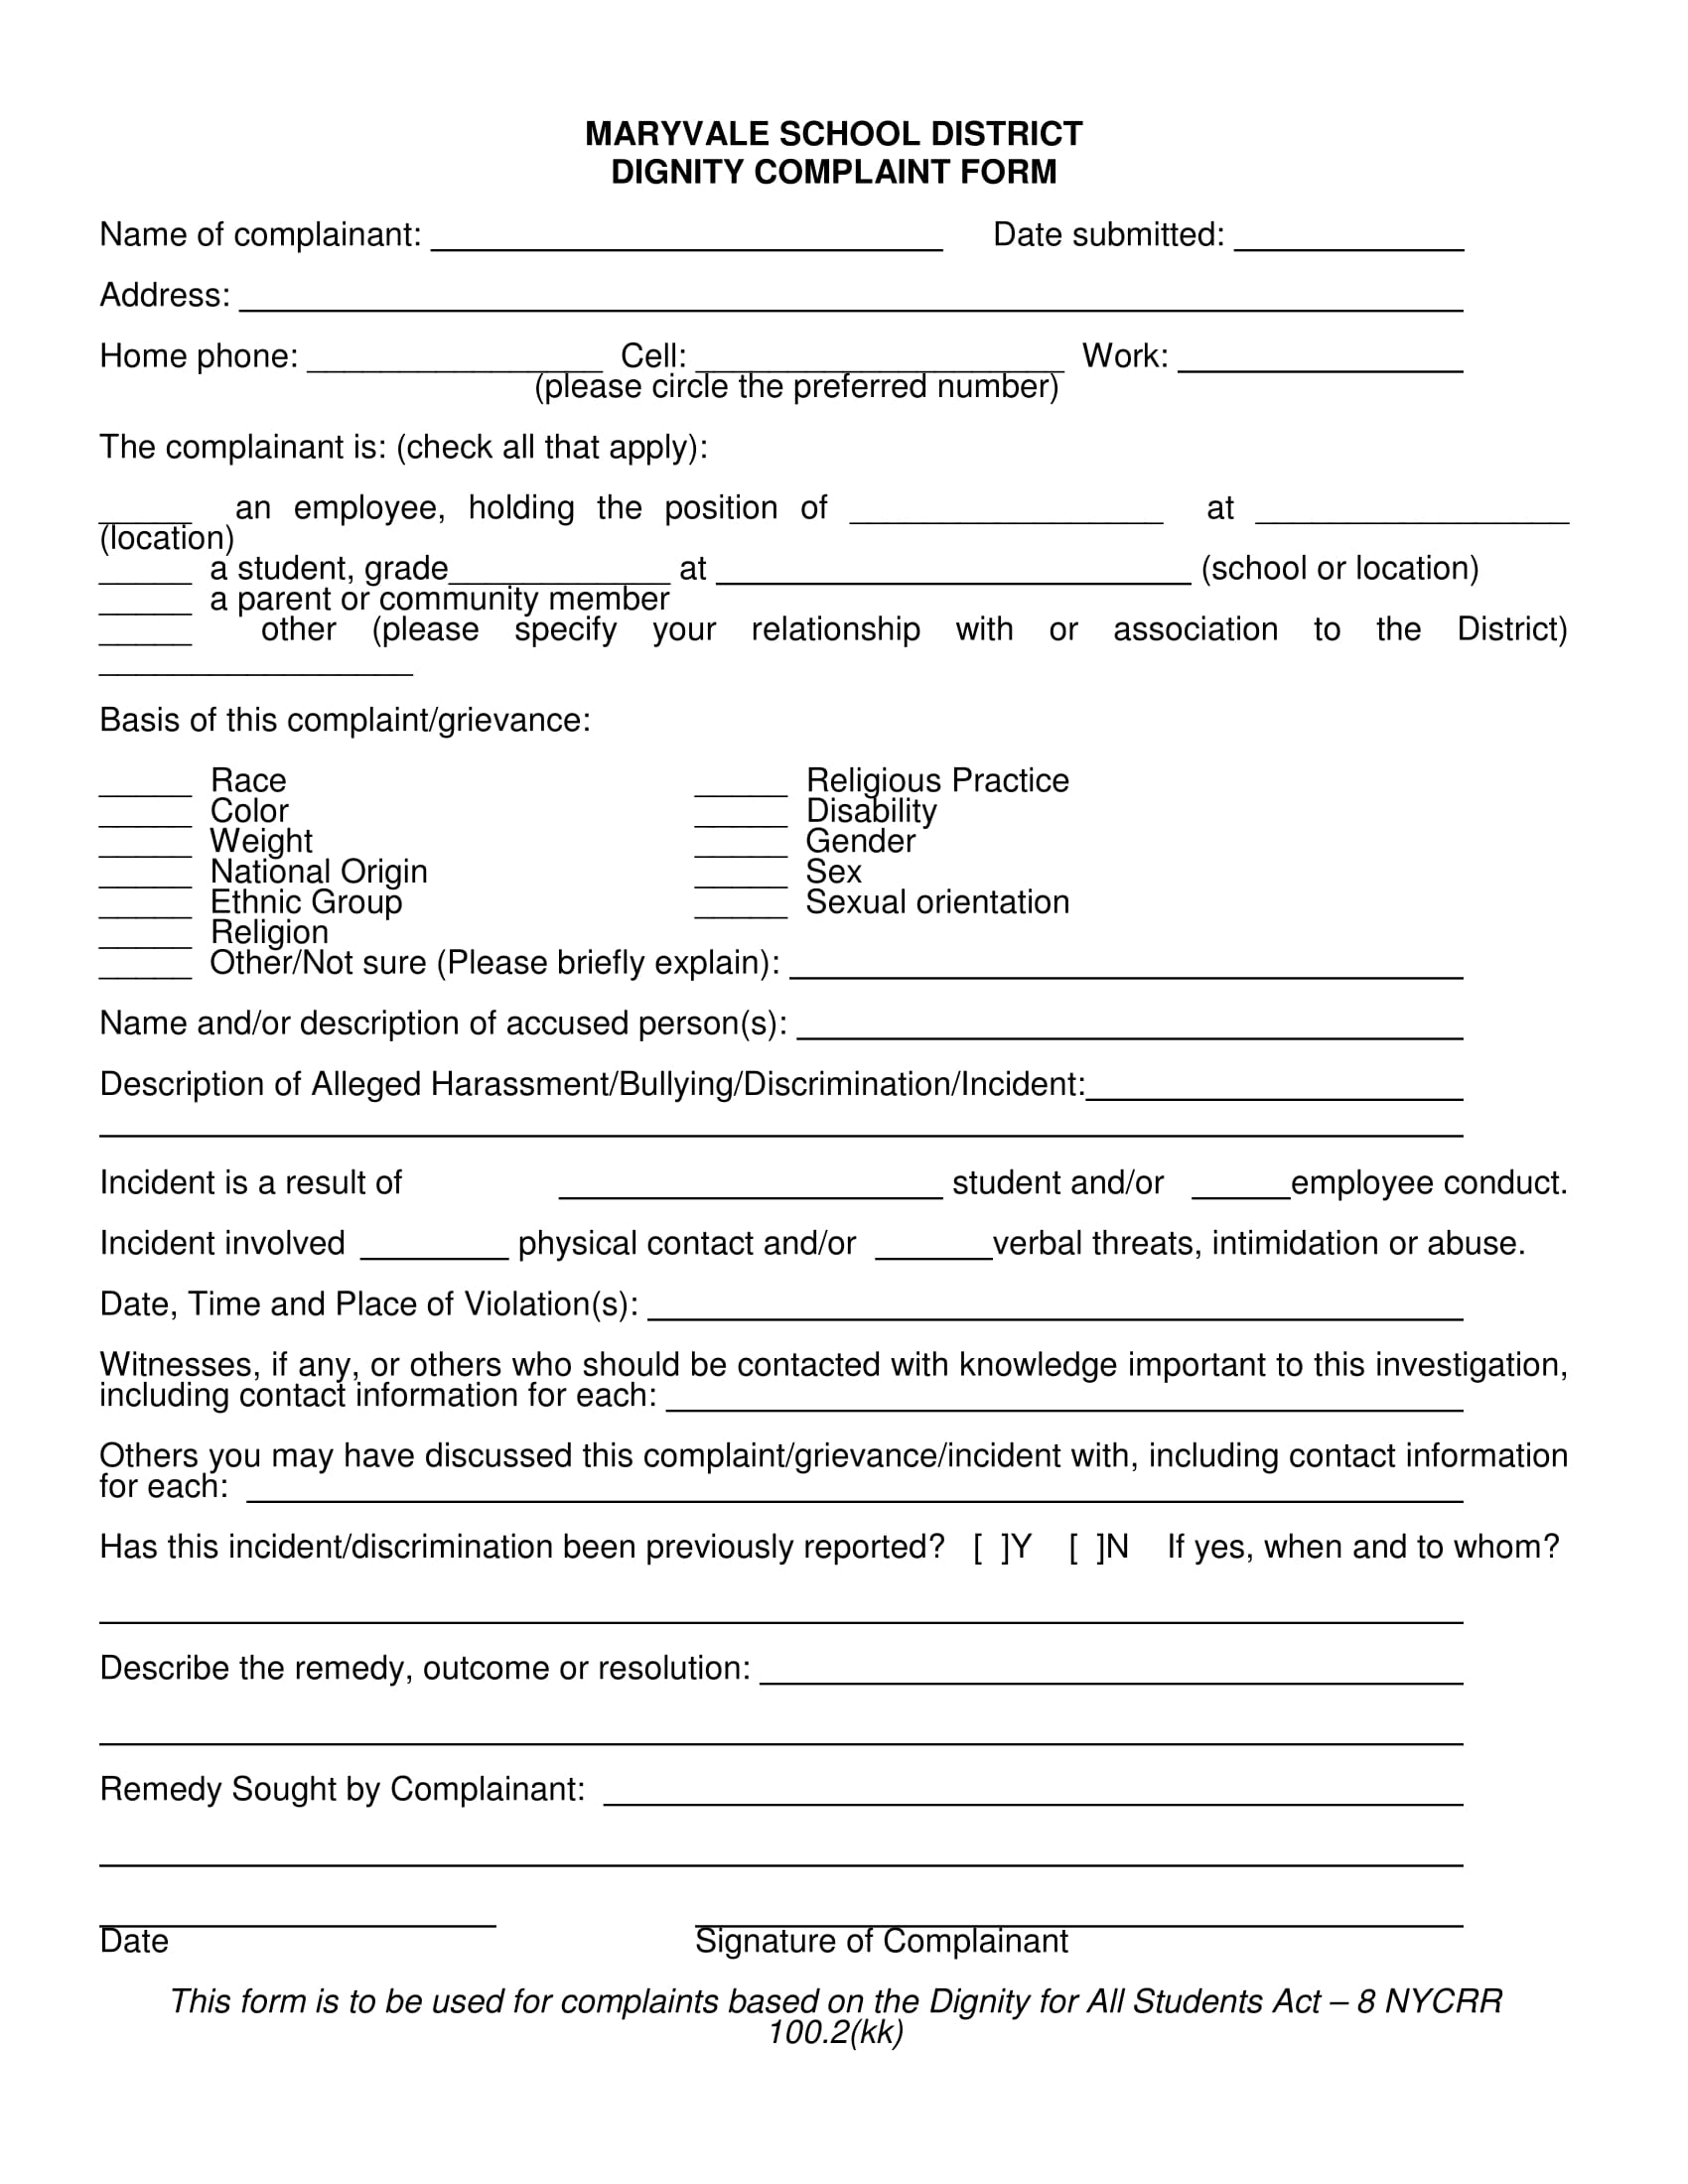 school dignity complaint form 1